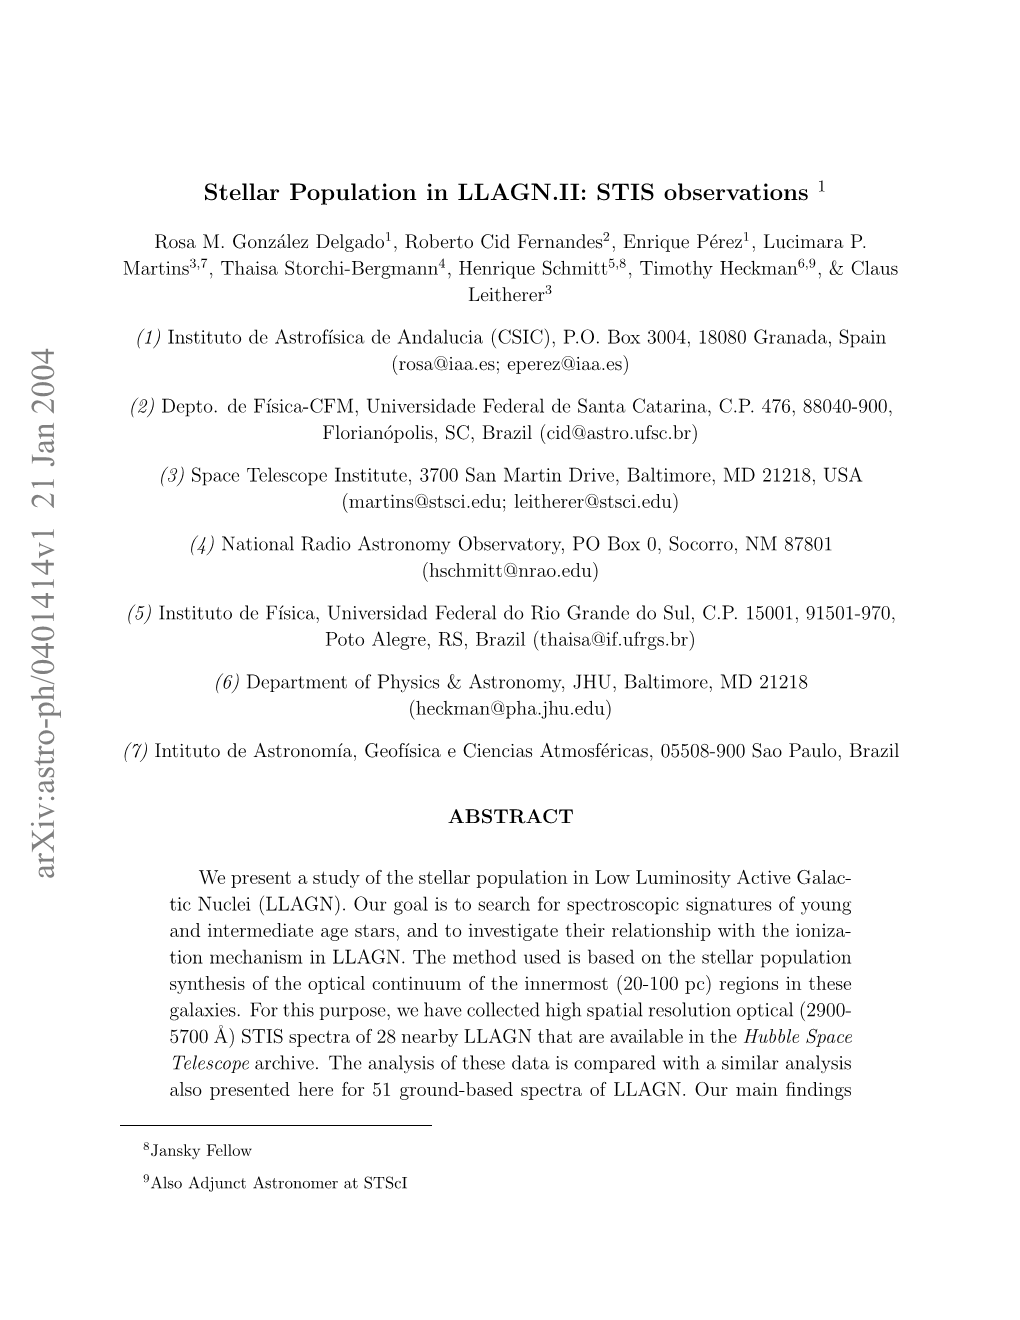 Stellar Population in LLAGN. II: STIS Observations